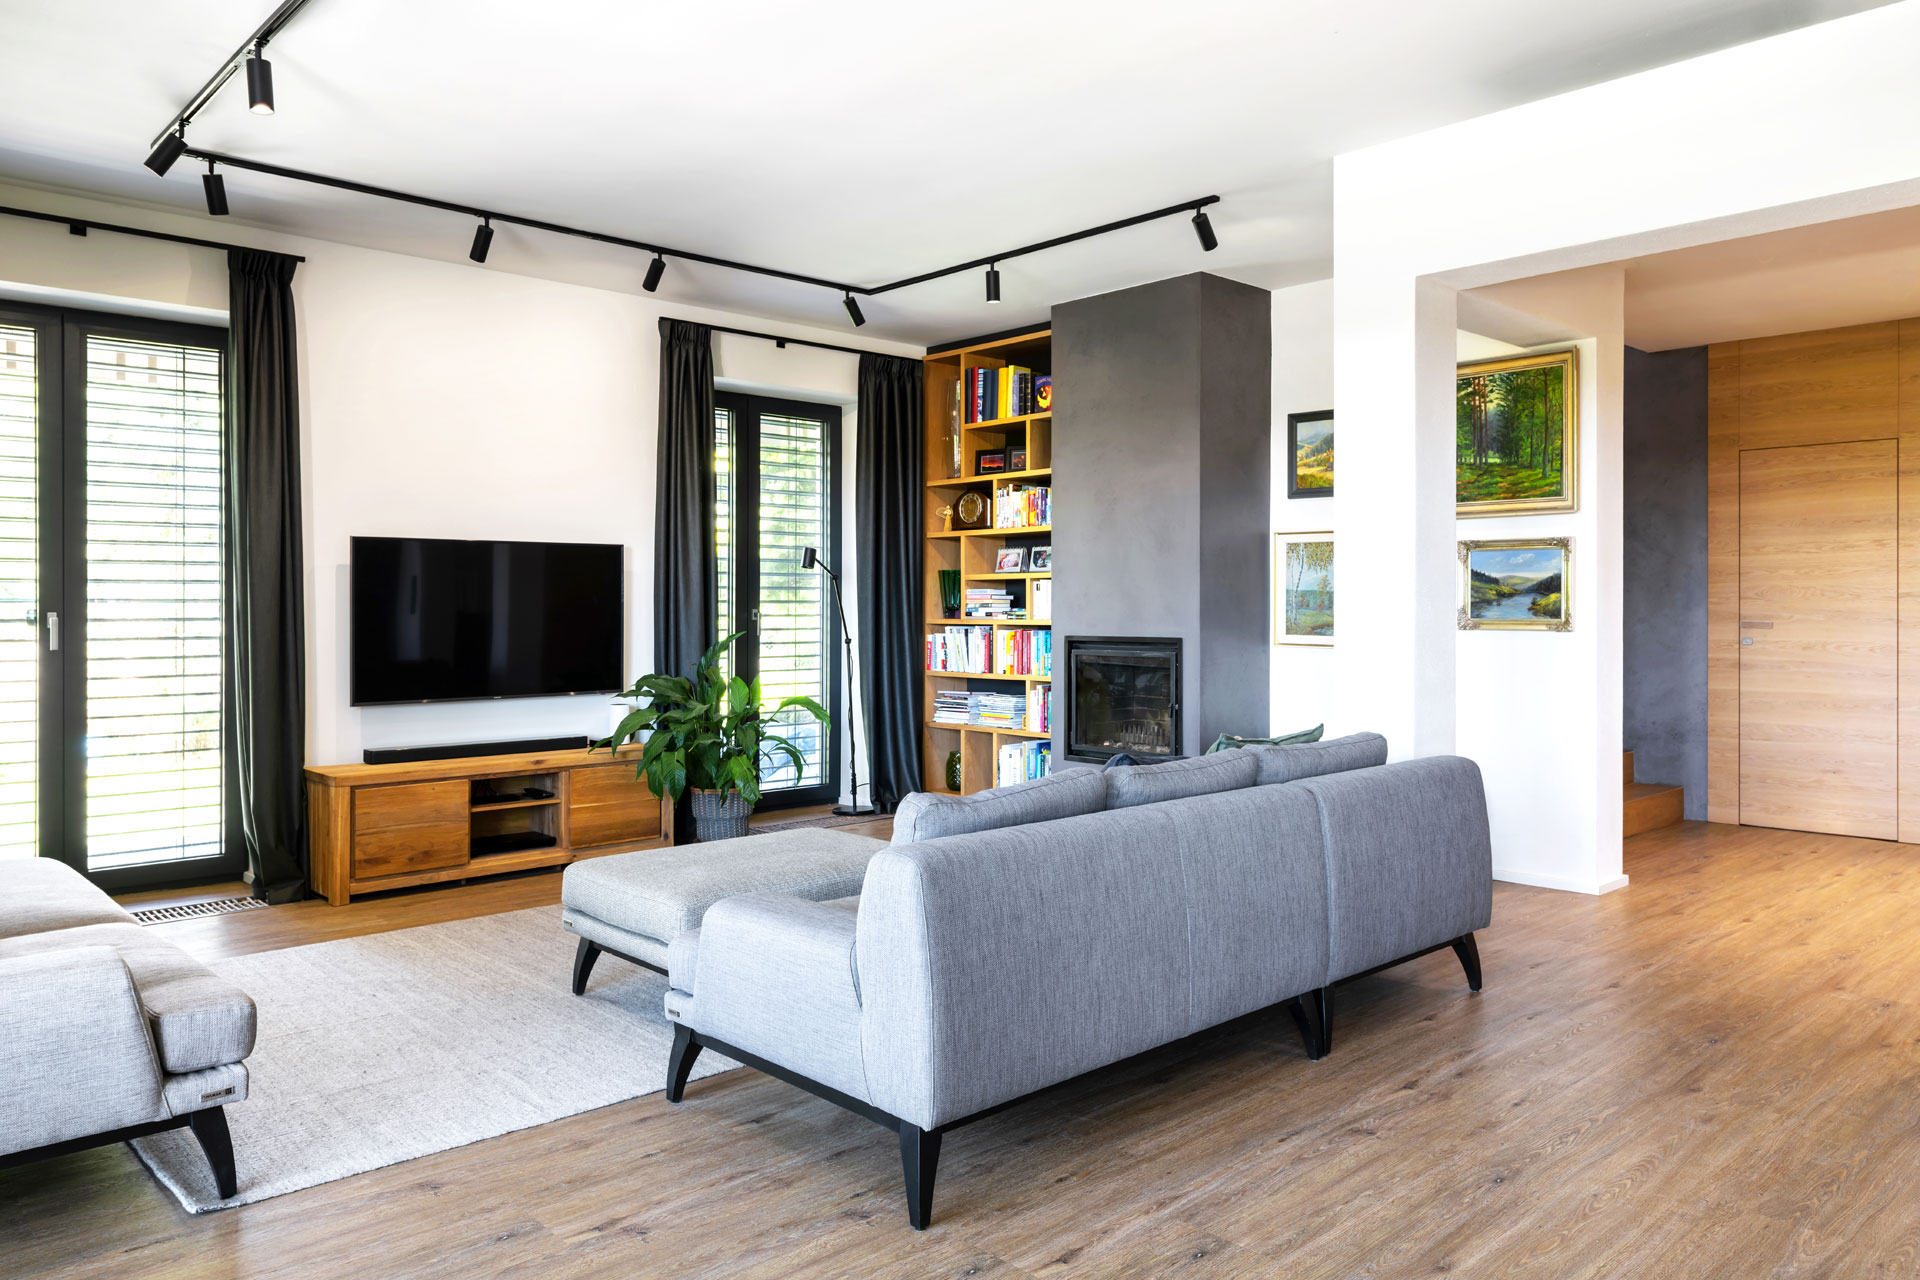 Hanák Furniture Customized interior design